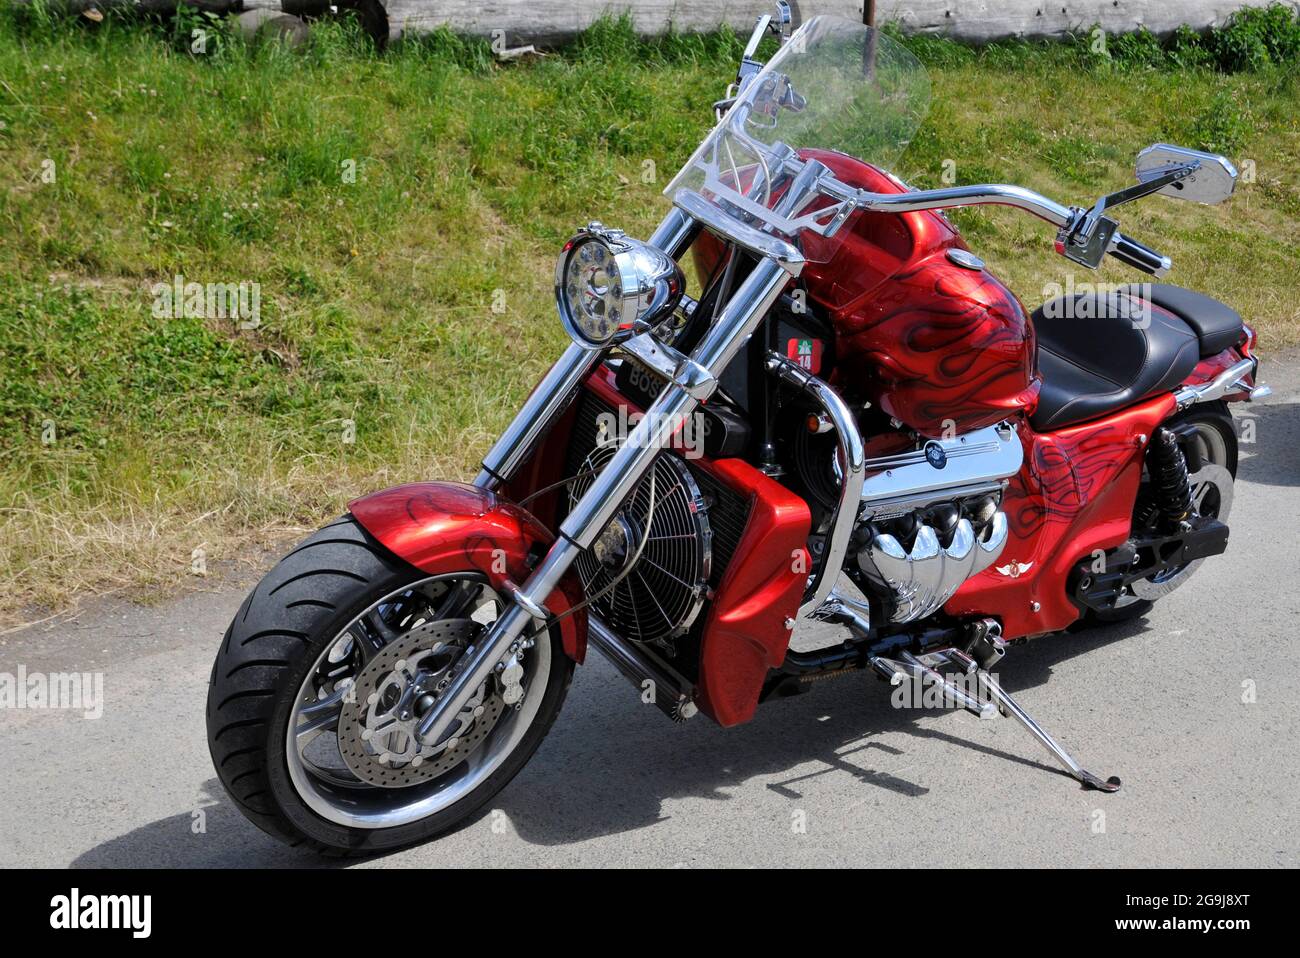 Motorcycle Photo - Alamy